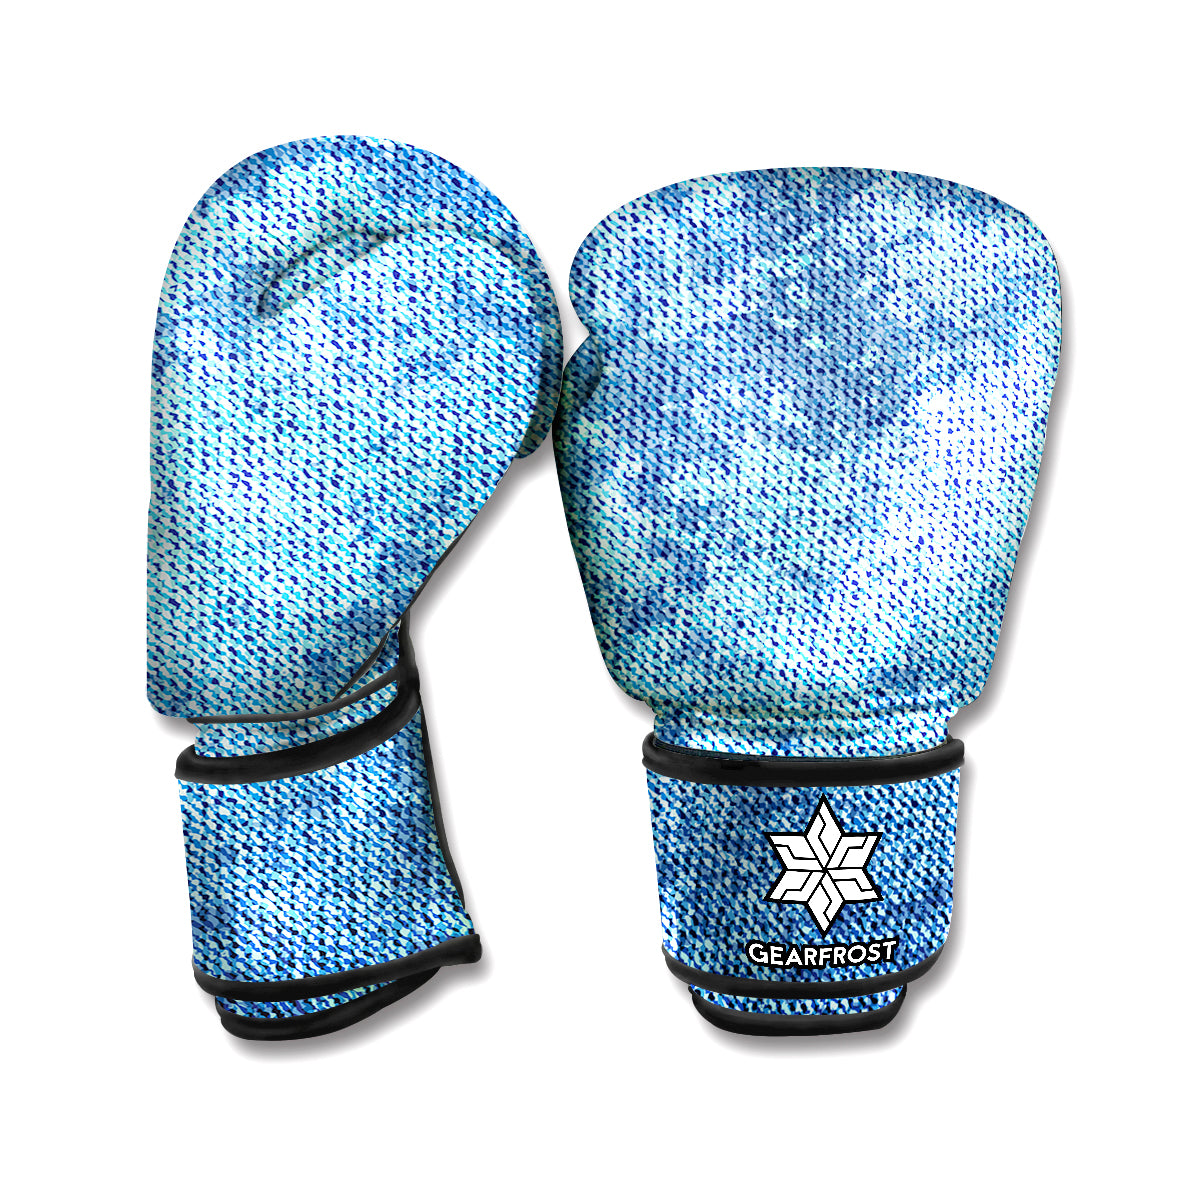 Acid Wash Denim Jeans Pattern Print Boxing Gloves